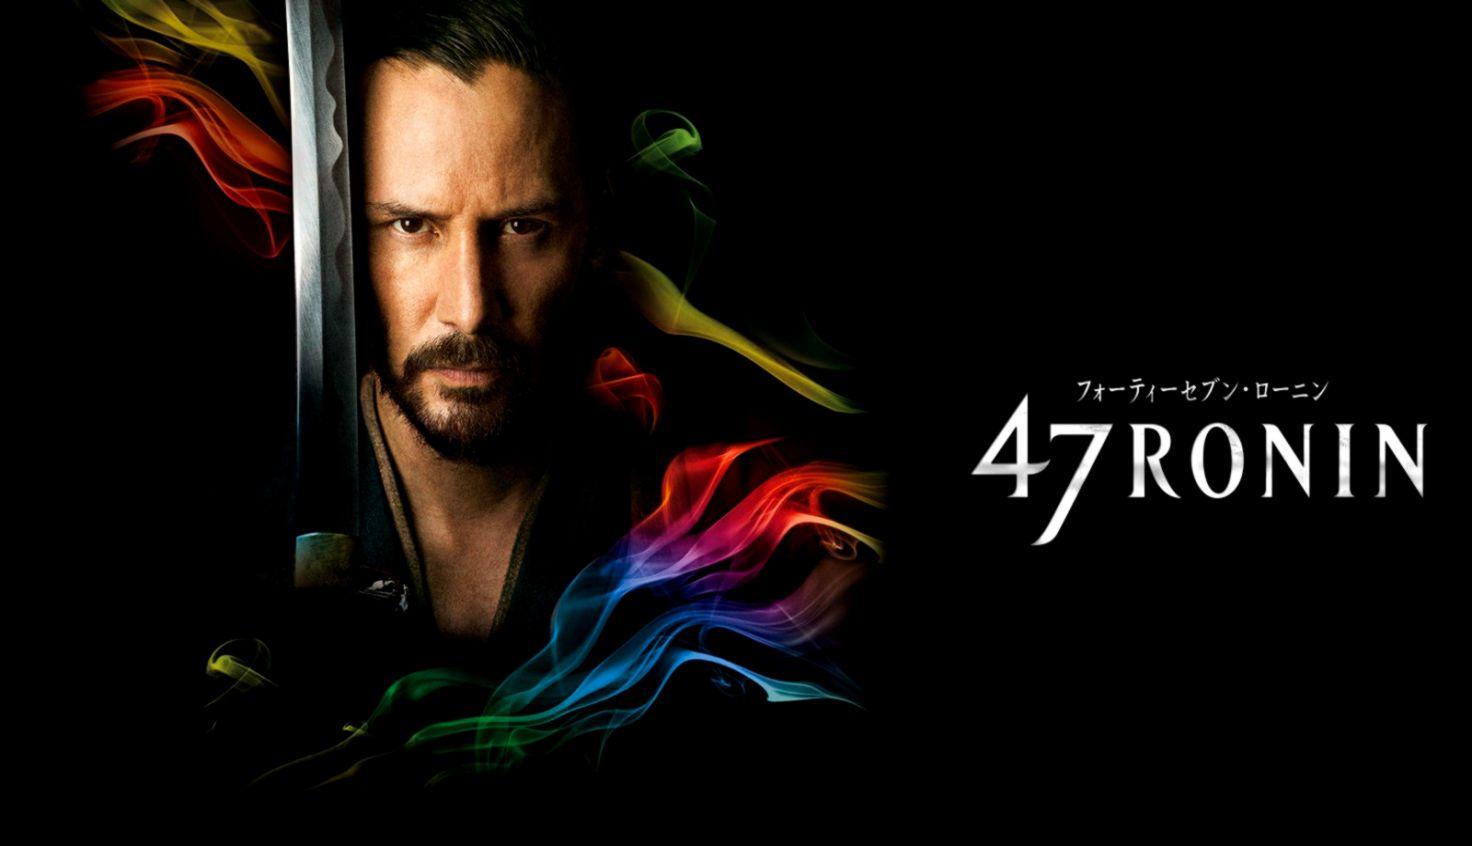 Keanu Reeves In 47 Ronin HD Wallpaper. High Definitions Wallpaper